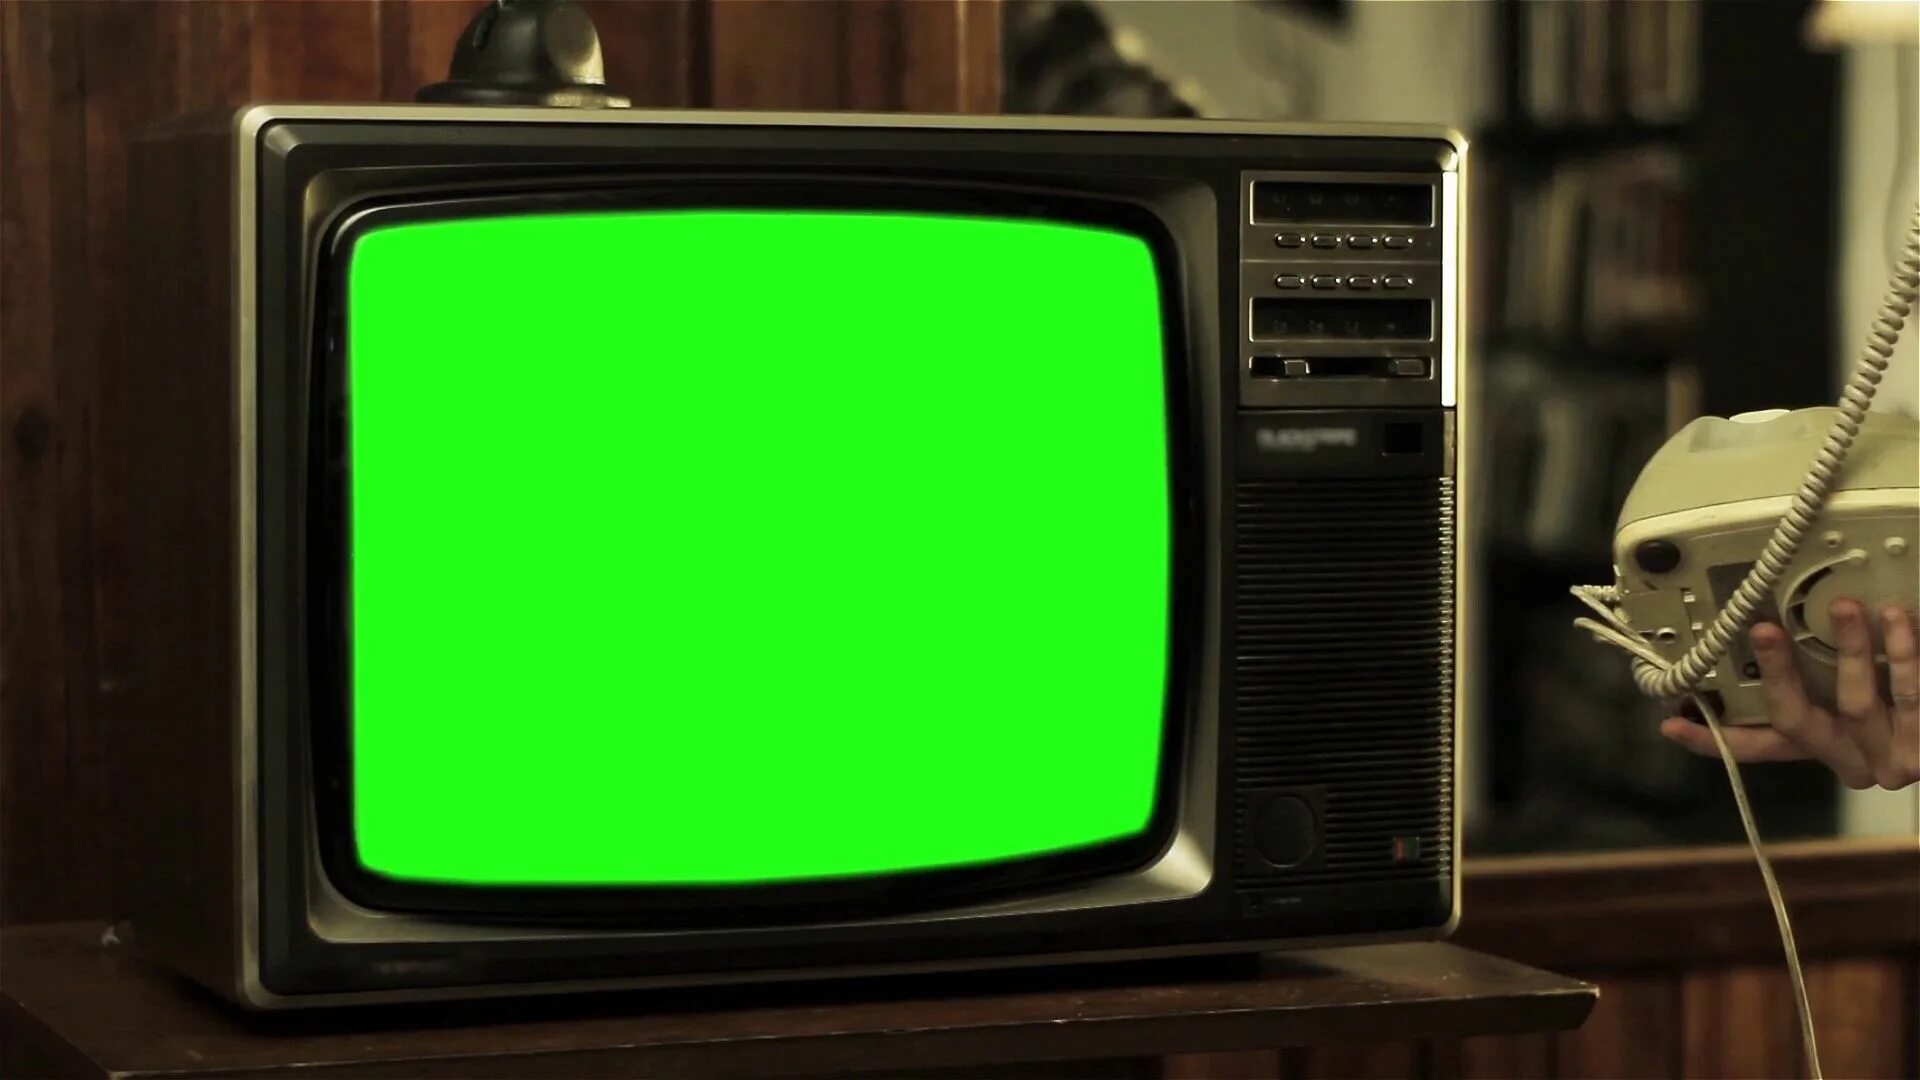 Телевизор стал зеленым. Старый телевизор. Телевизор с зеленым экраном. Старый телевизор с зеленым экраном. Старый телевизор хромакей.